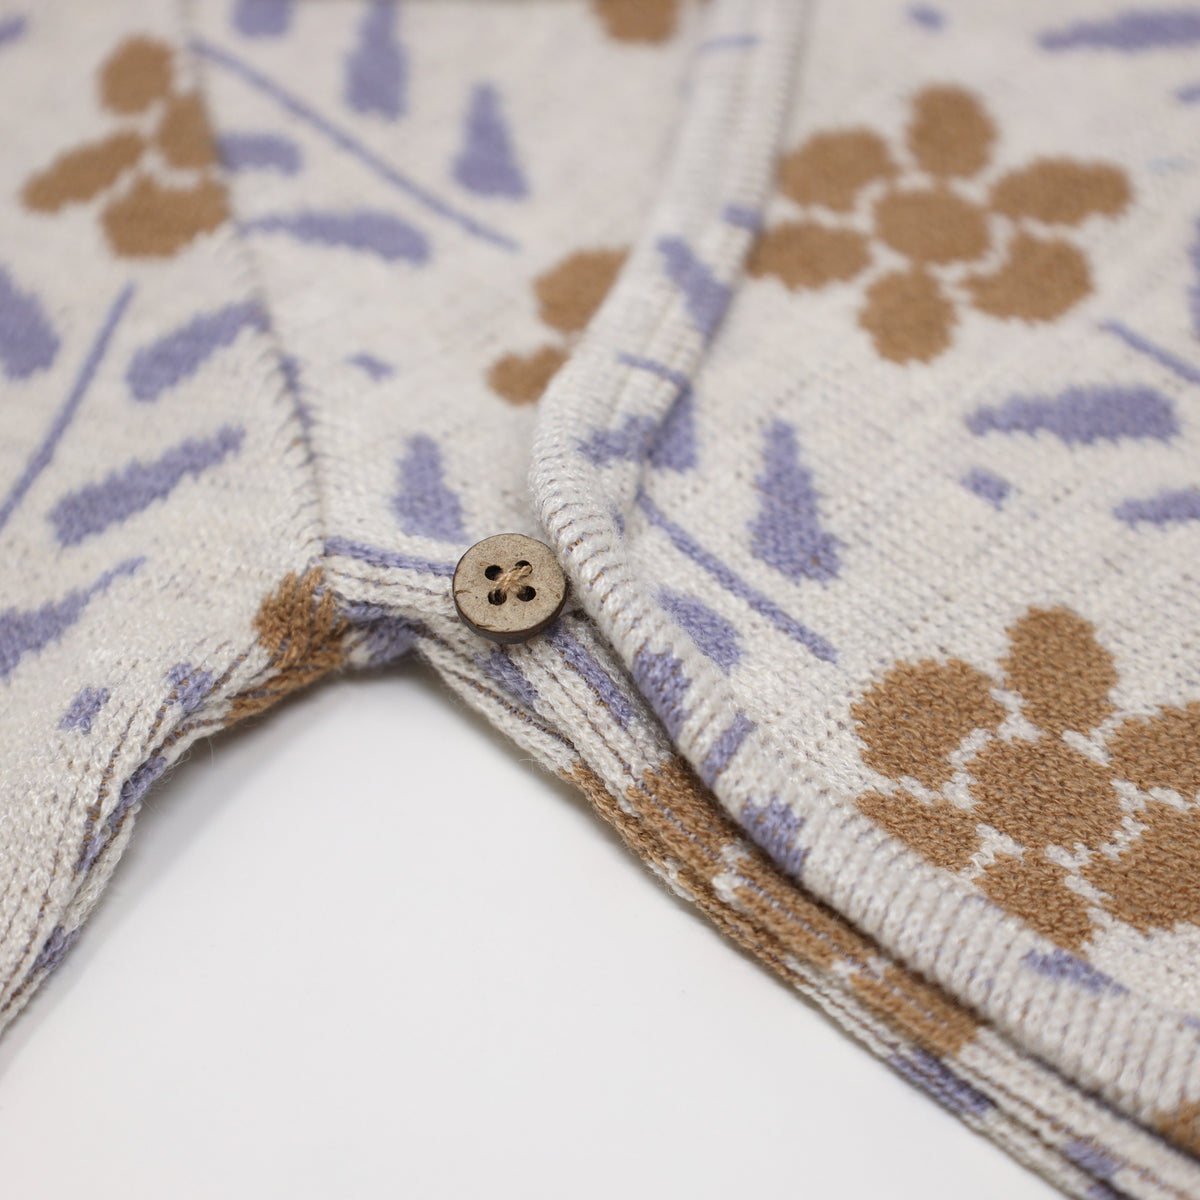 oh baby Kimono Footie Set Nordic Flower Double Knit - Caramel Wisteria